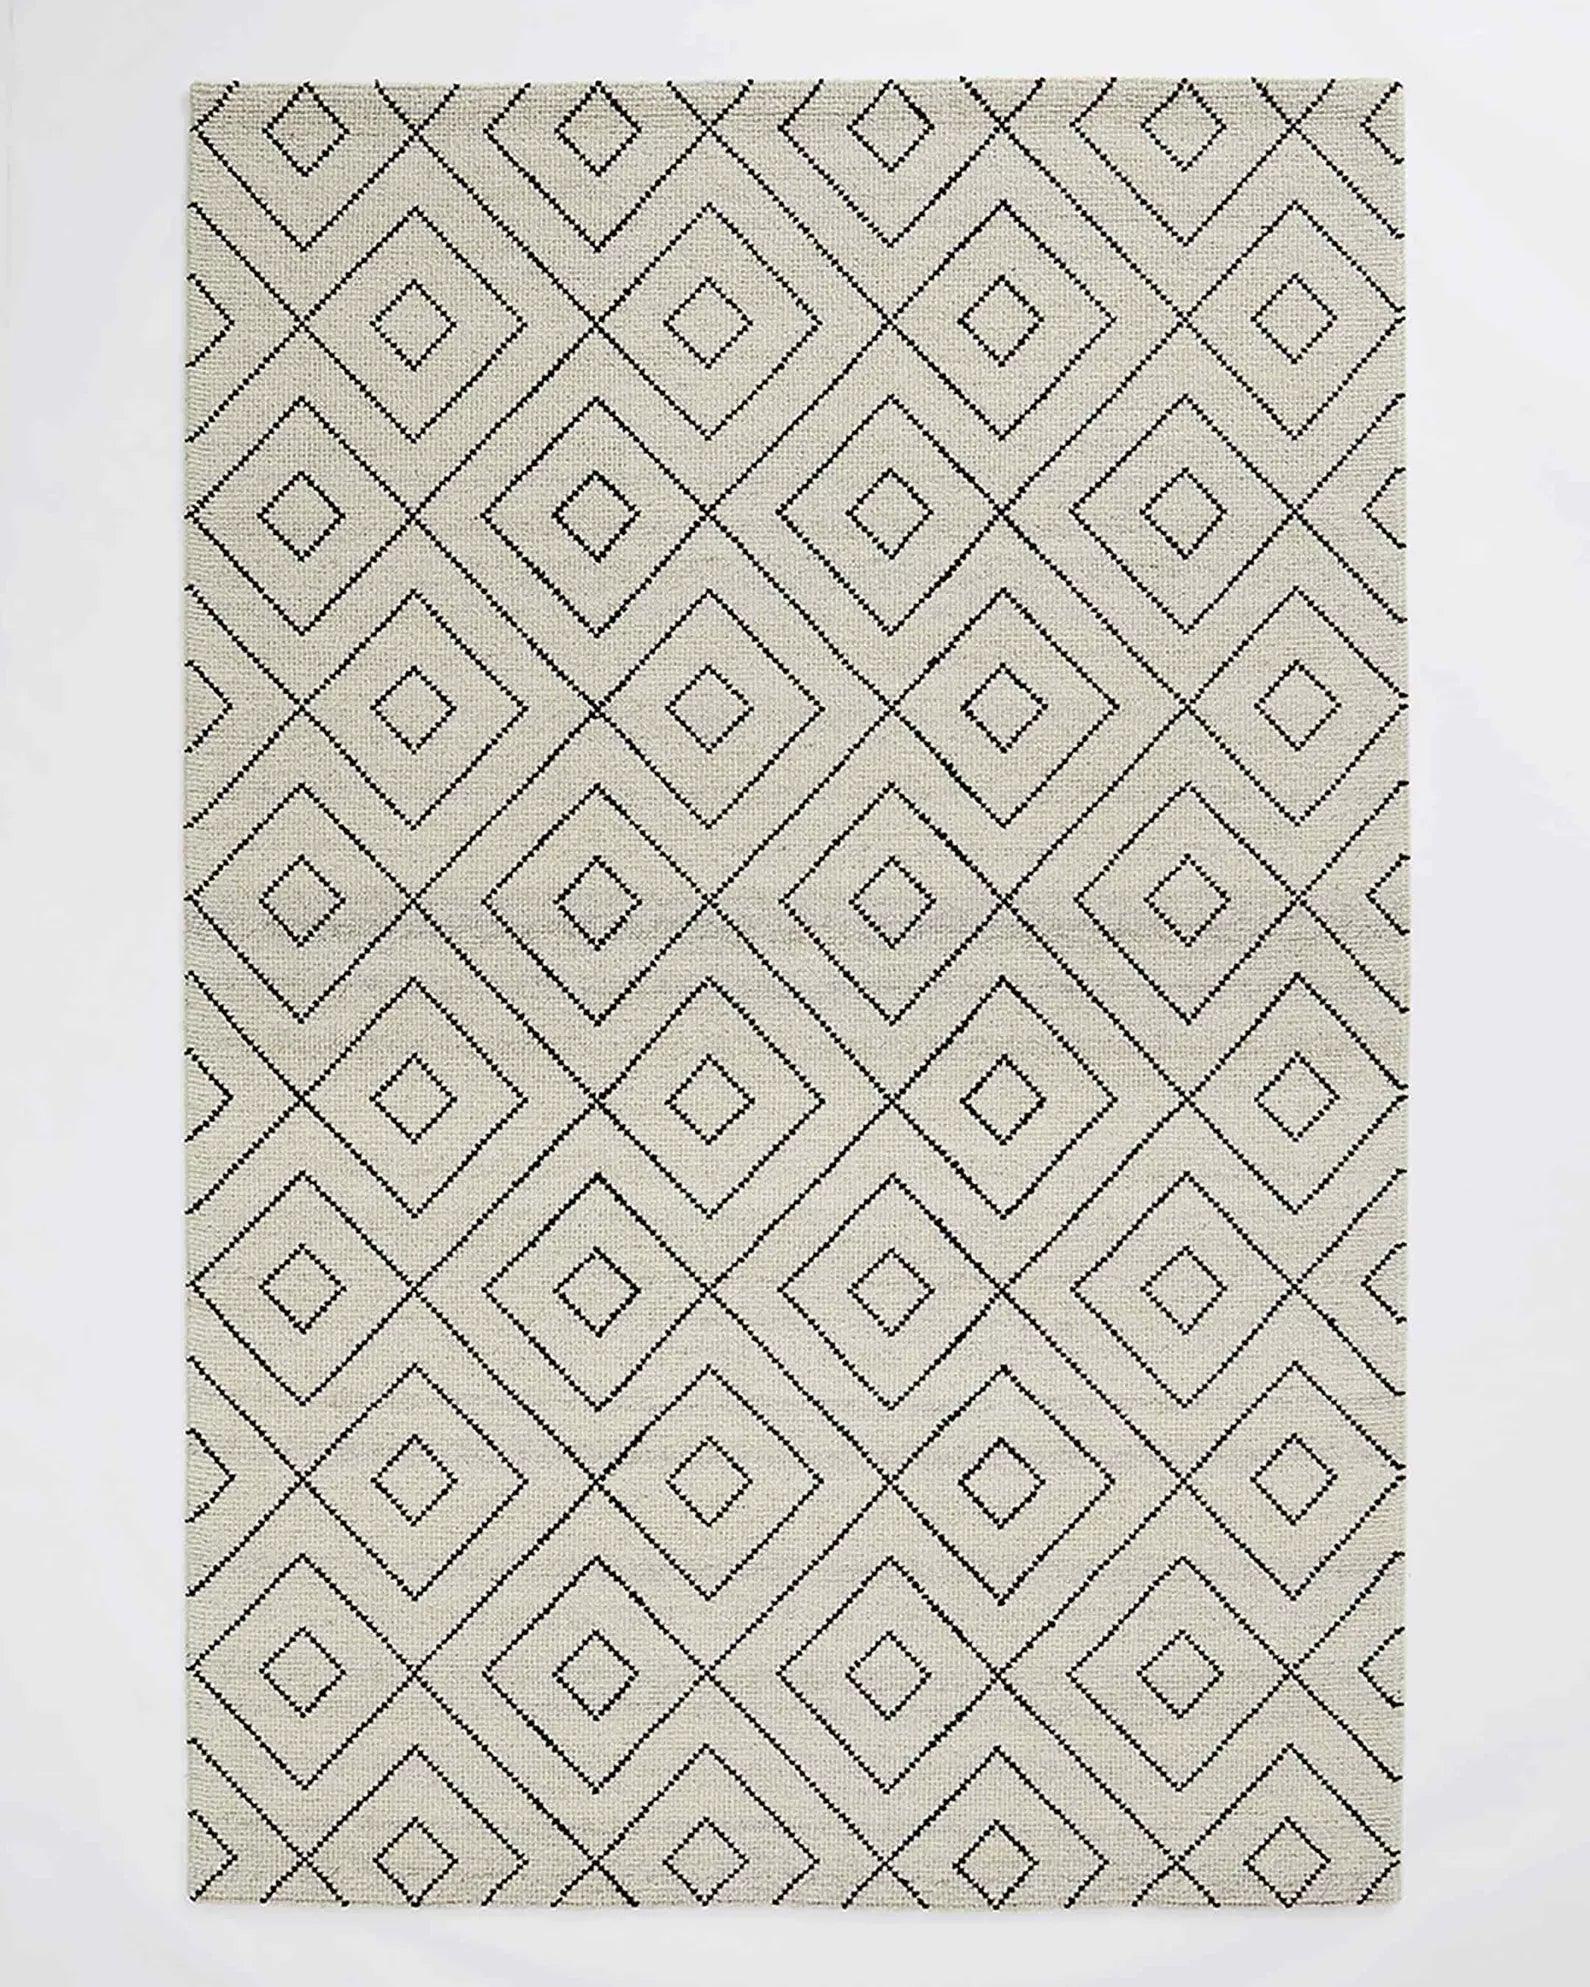 Weave Makalu Floor Rug - Feather - 1.6m x 2.3m - RugRMU71FEAT 4